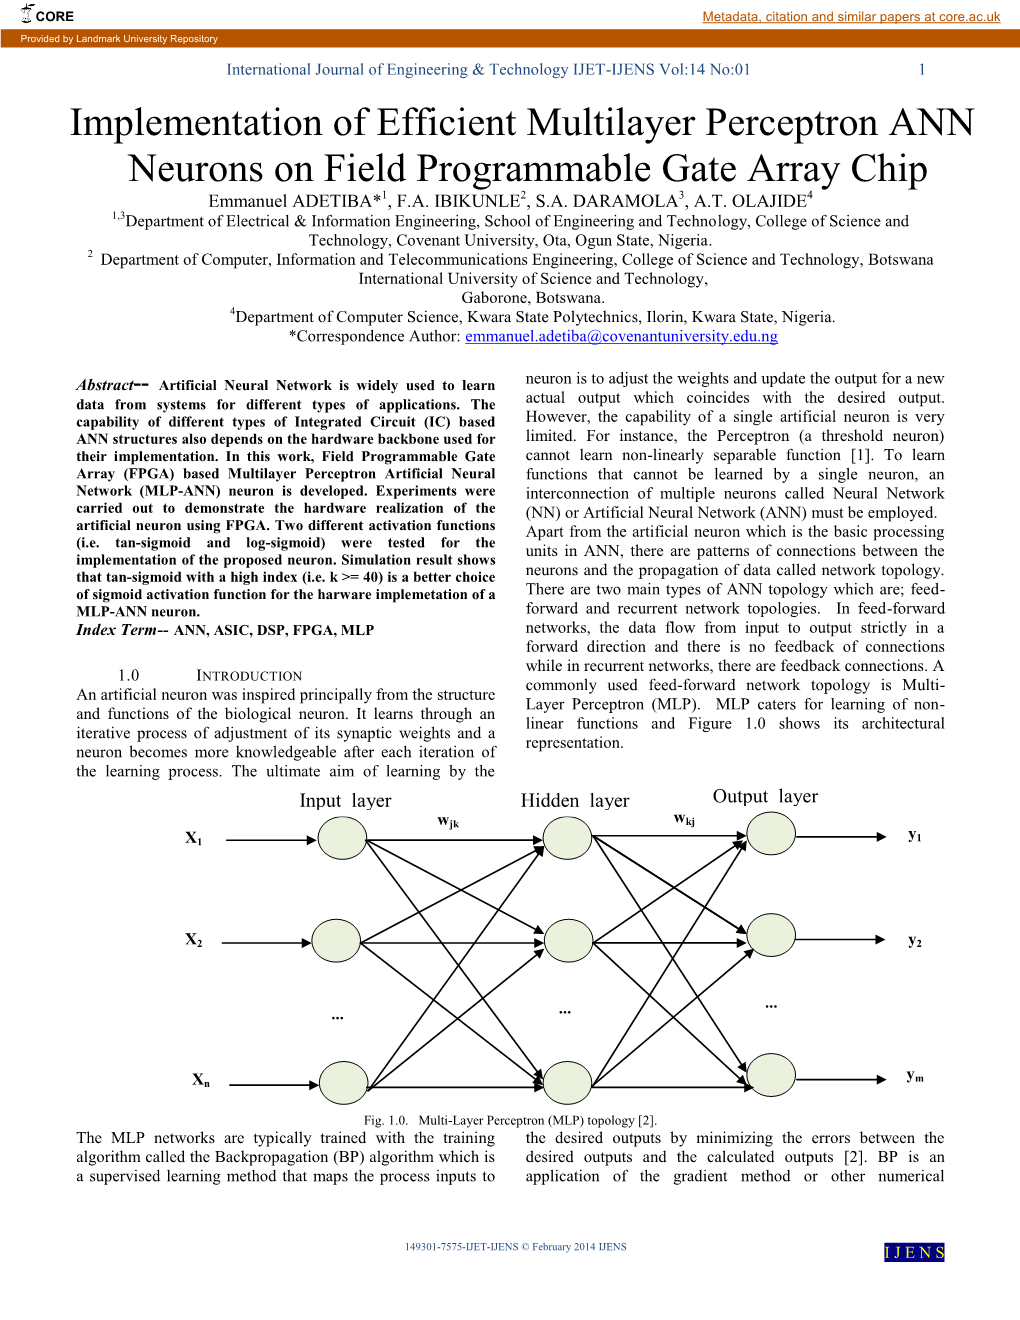 Implementation of Efficient Multilayer Perceptron ANN Neurons on Field Programmable Gate Array Chip Emmanuel ADETIBA*1, F.A